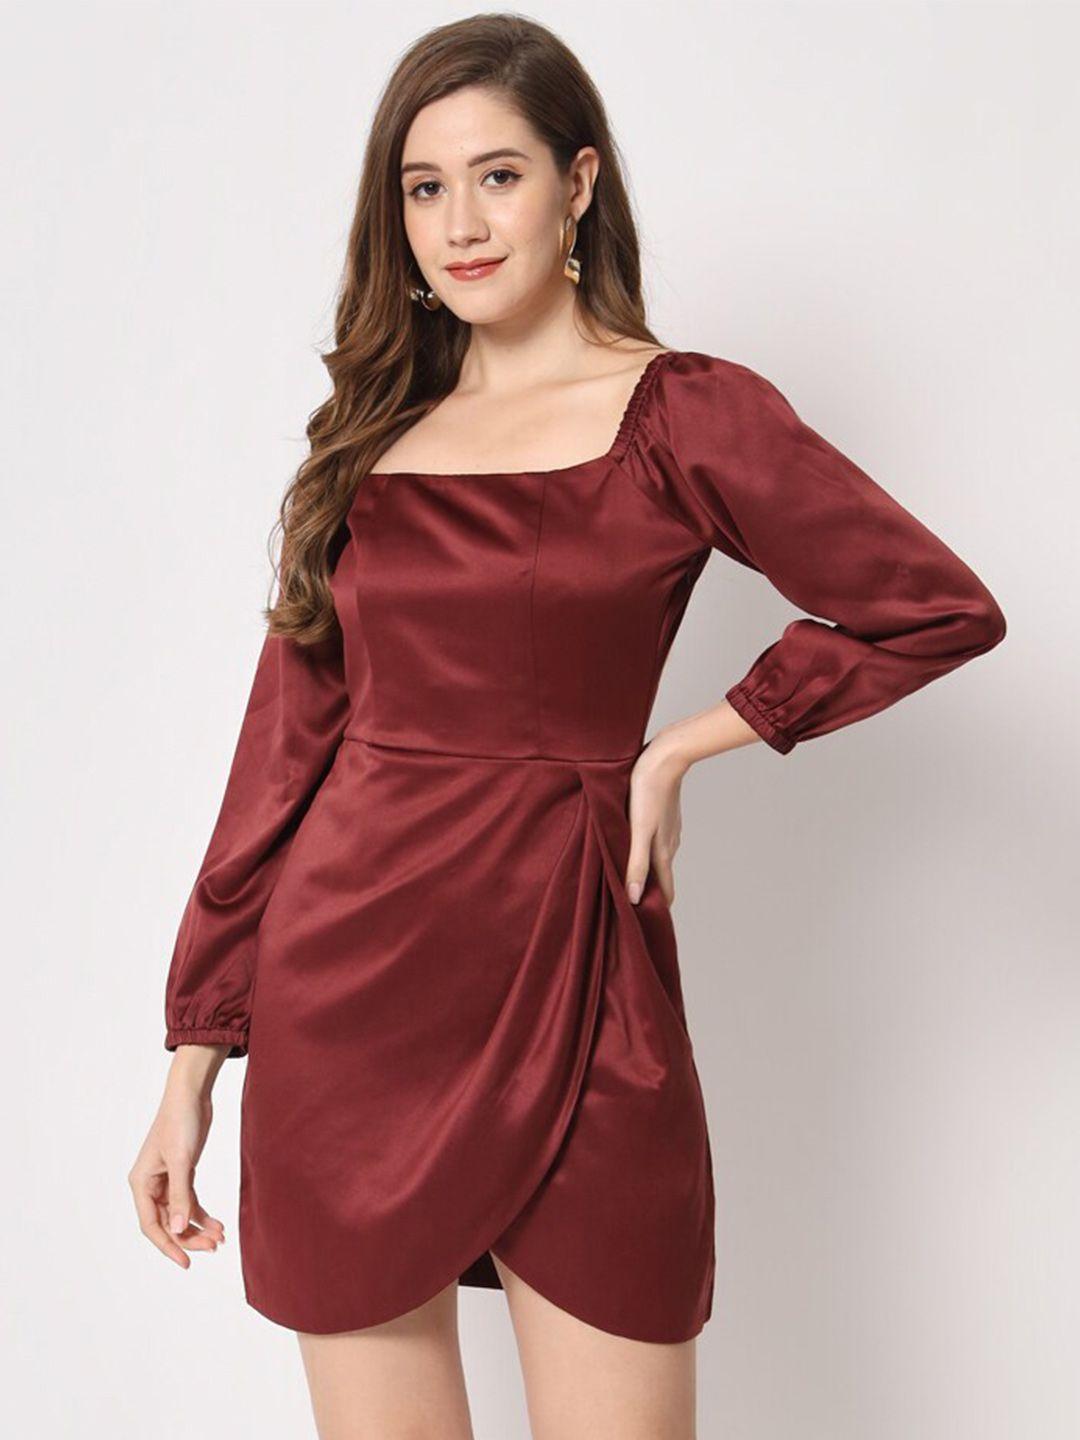 charmgal maroon satin sheath dress